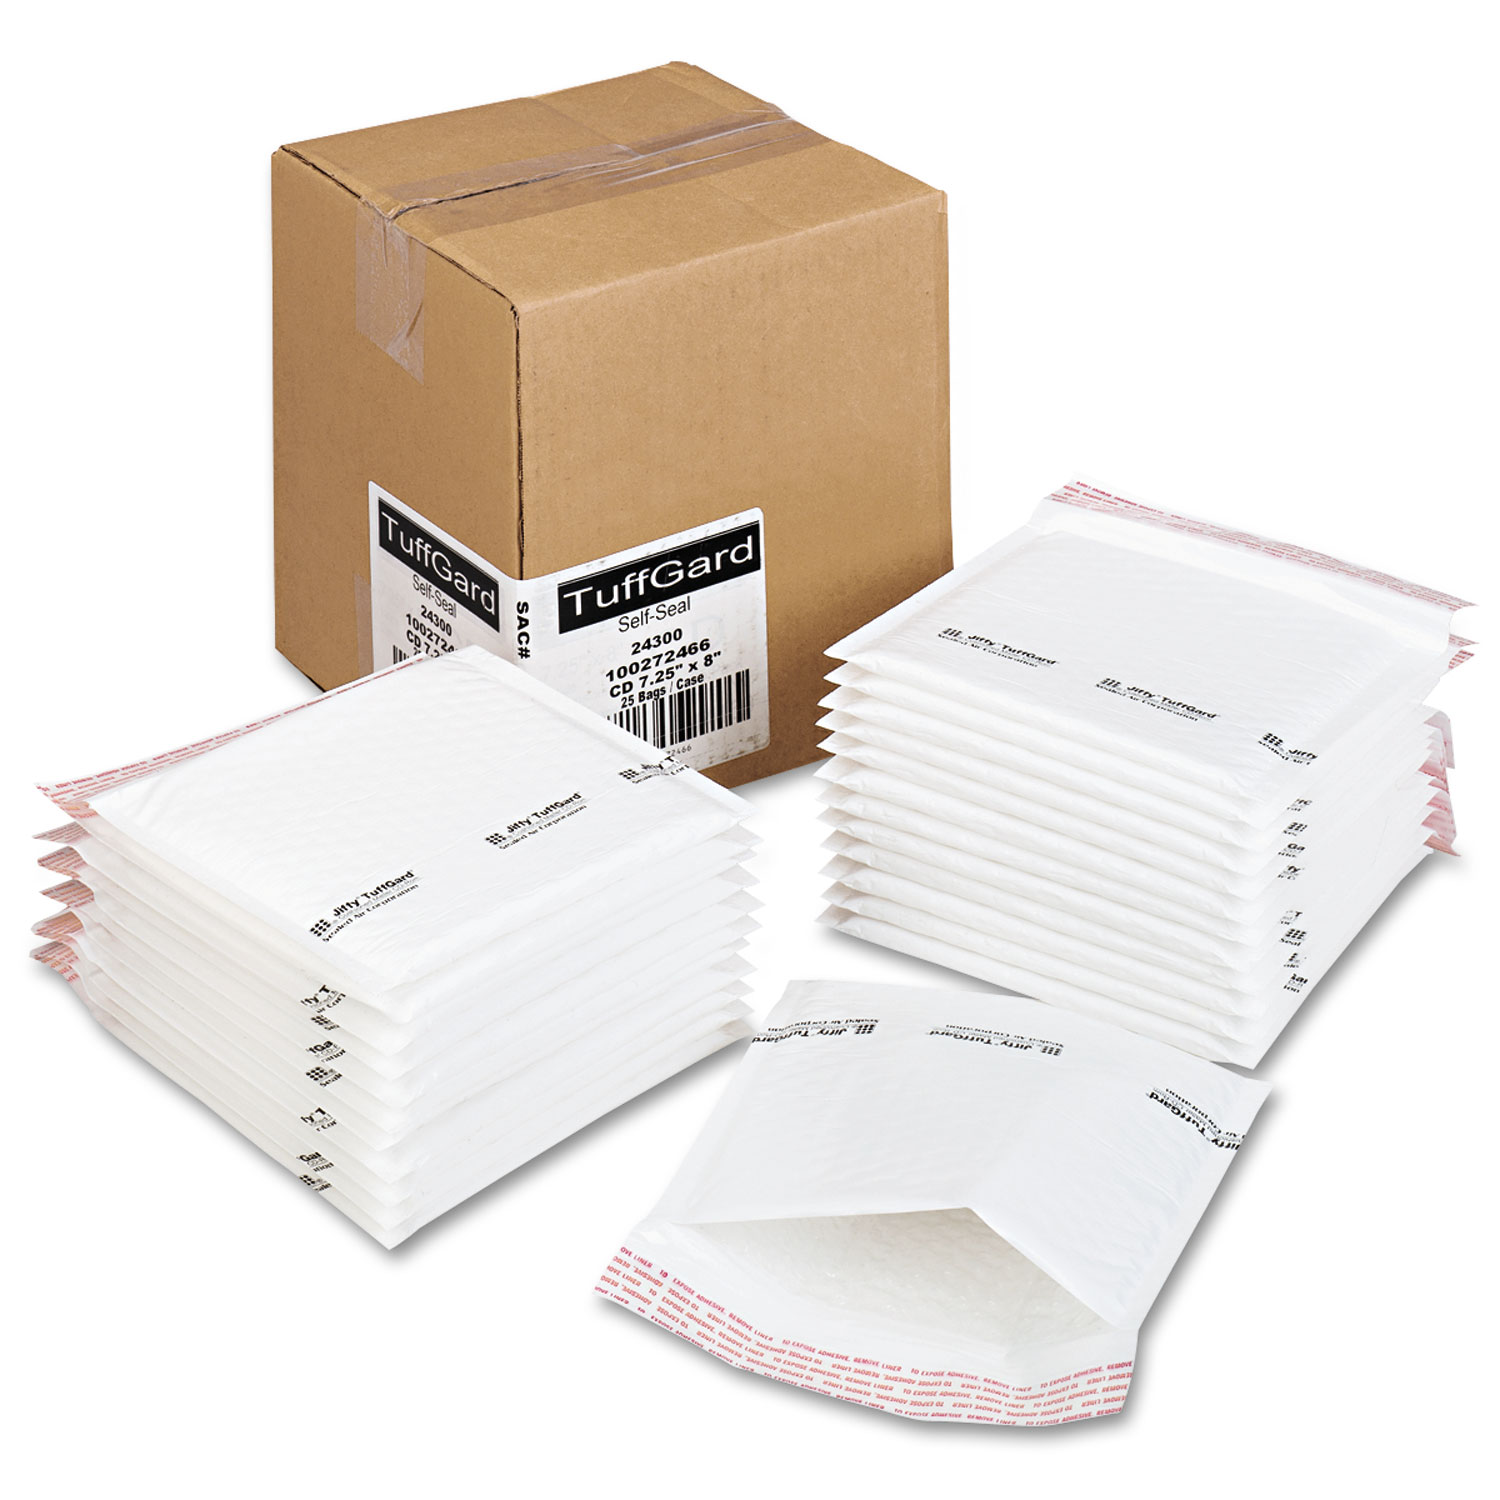  Sealed Air 100272466 Jiffy TuffGard Self-Seal Cushioned Mailer, CD, Barrier Bubble Lining, Self-Adhesive Closure, 7.25 x 8, White, 25/Carton (SEL24300) 